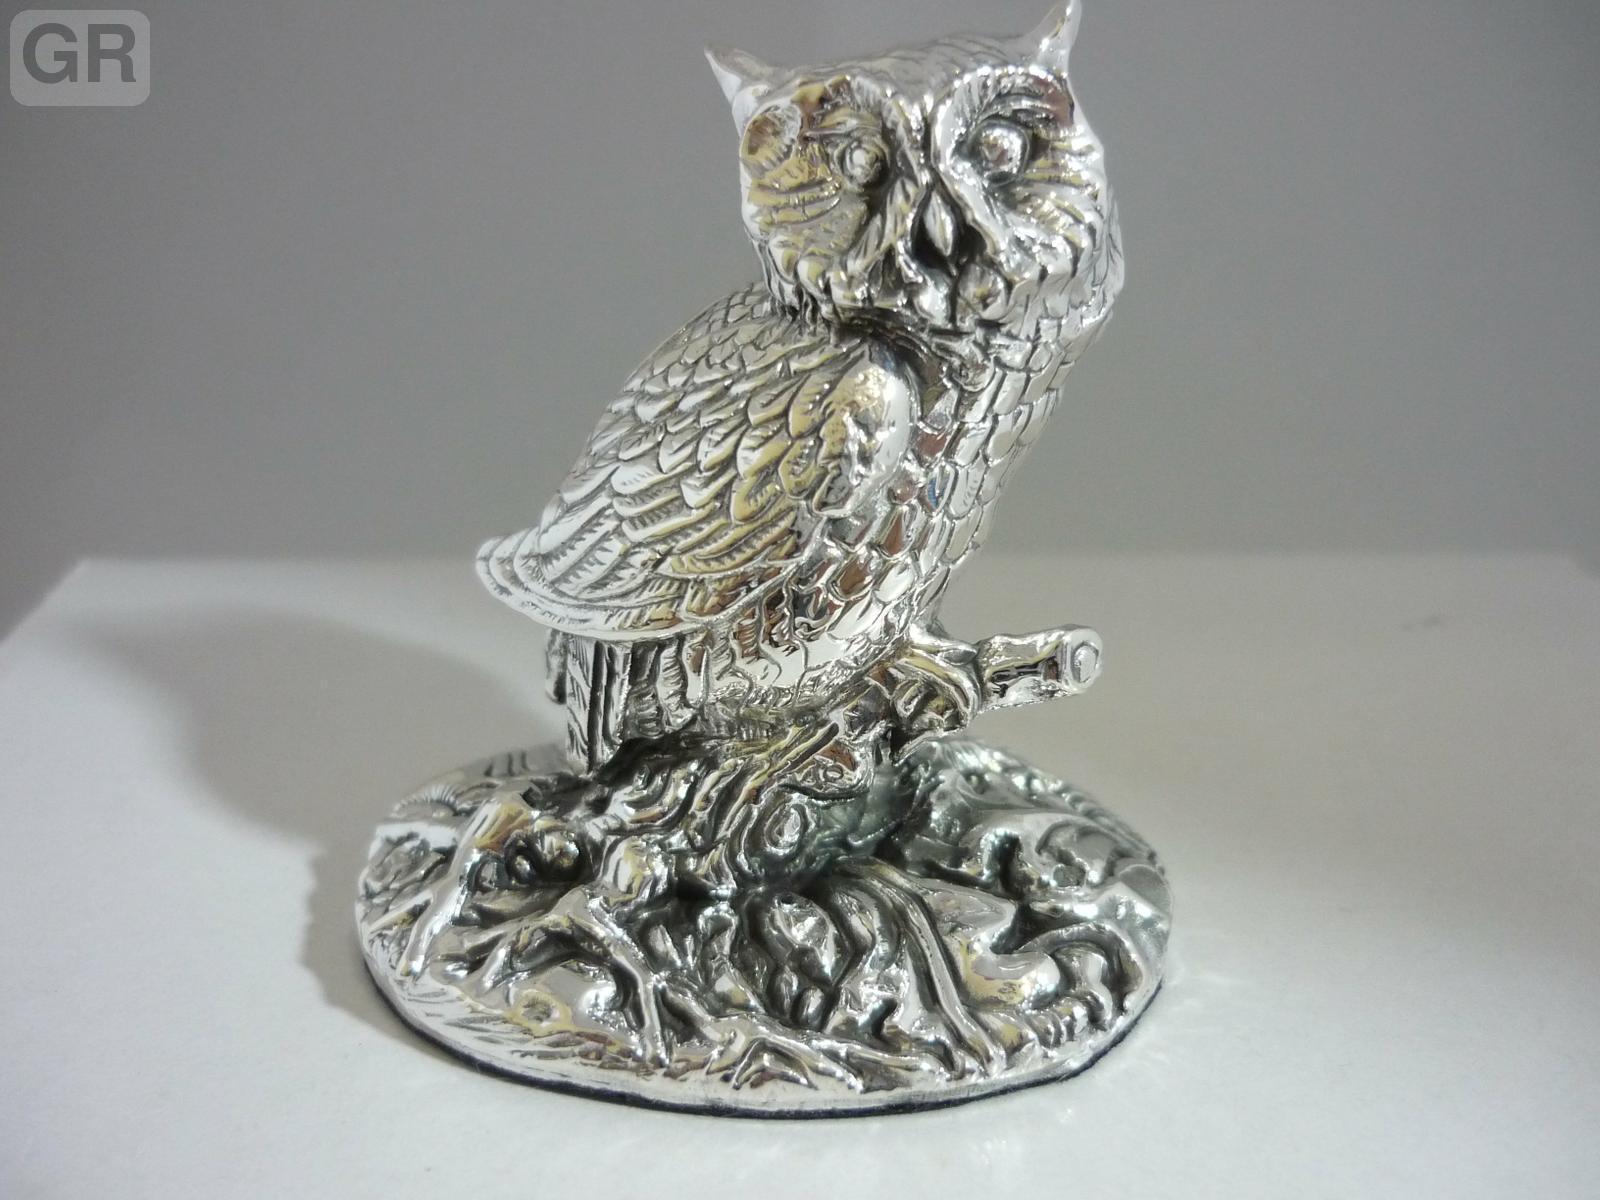 Stunning Hallmarked Sterling Silver Owl Statue Brand new